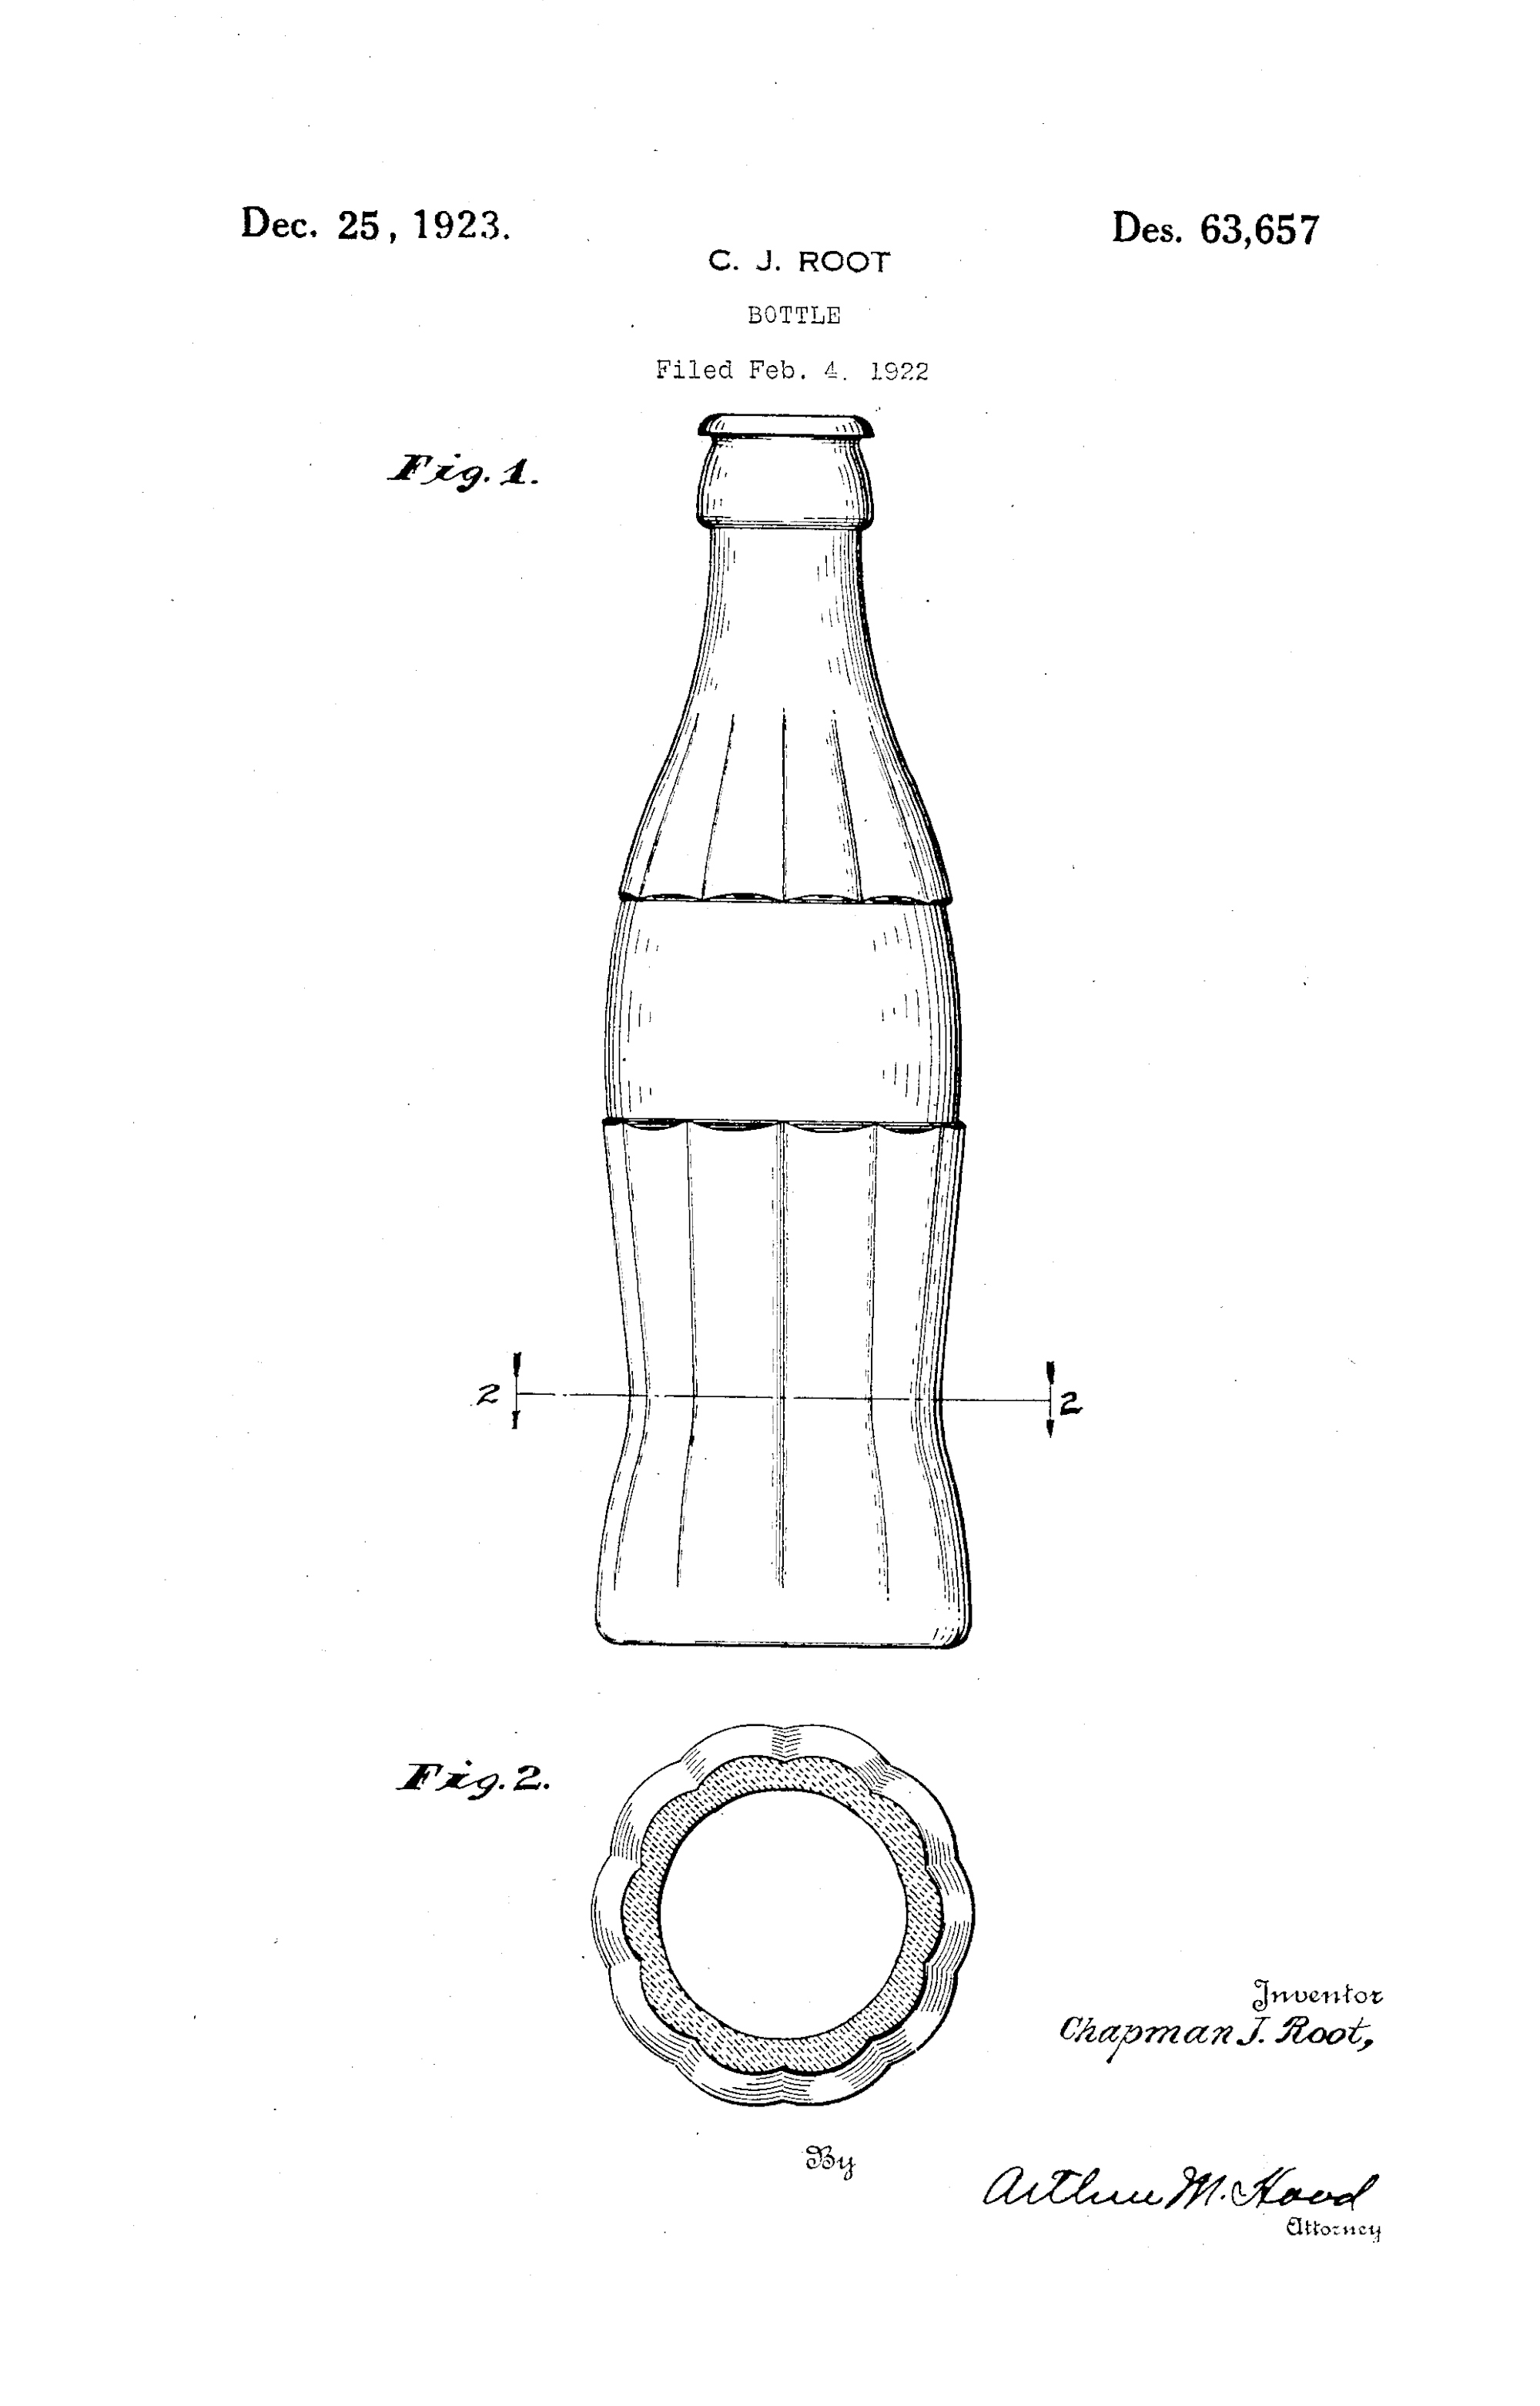 Bottle, Chapman J. Root, 1922/1923. Patent Number: USD 63,657, U.S. Patent Office